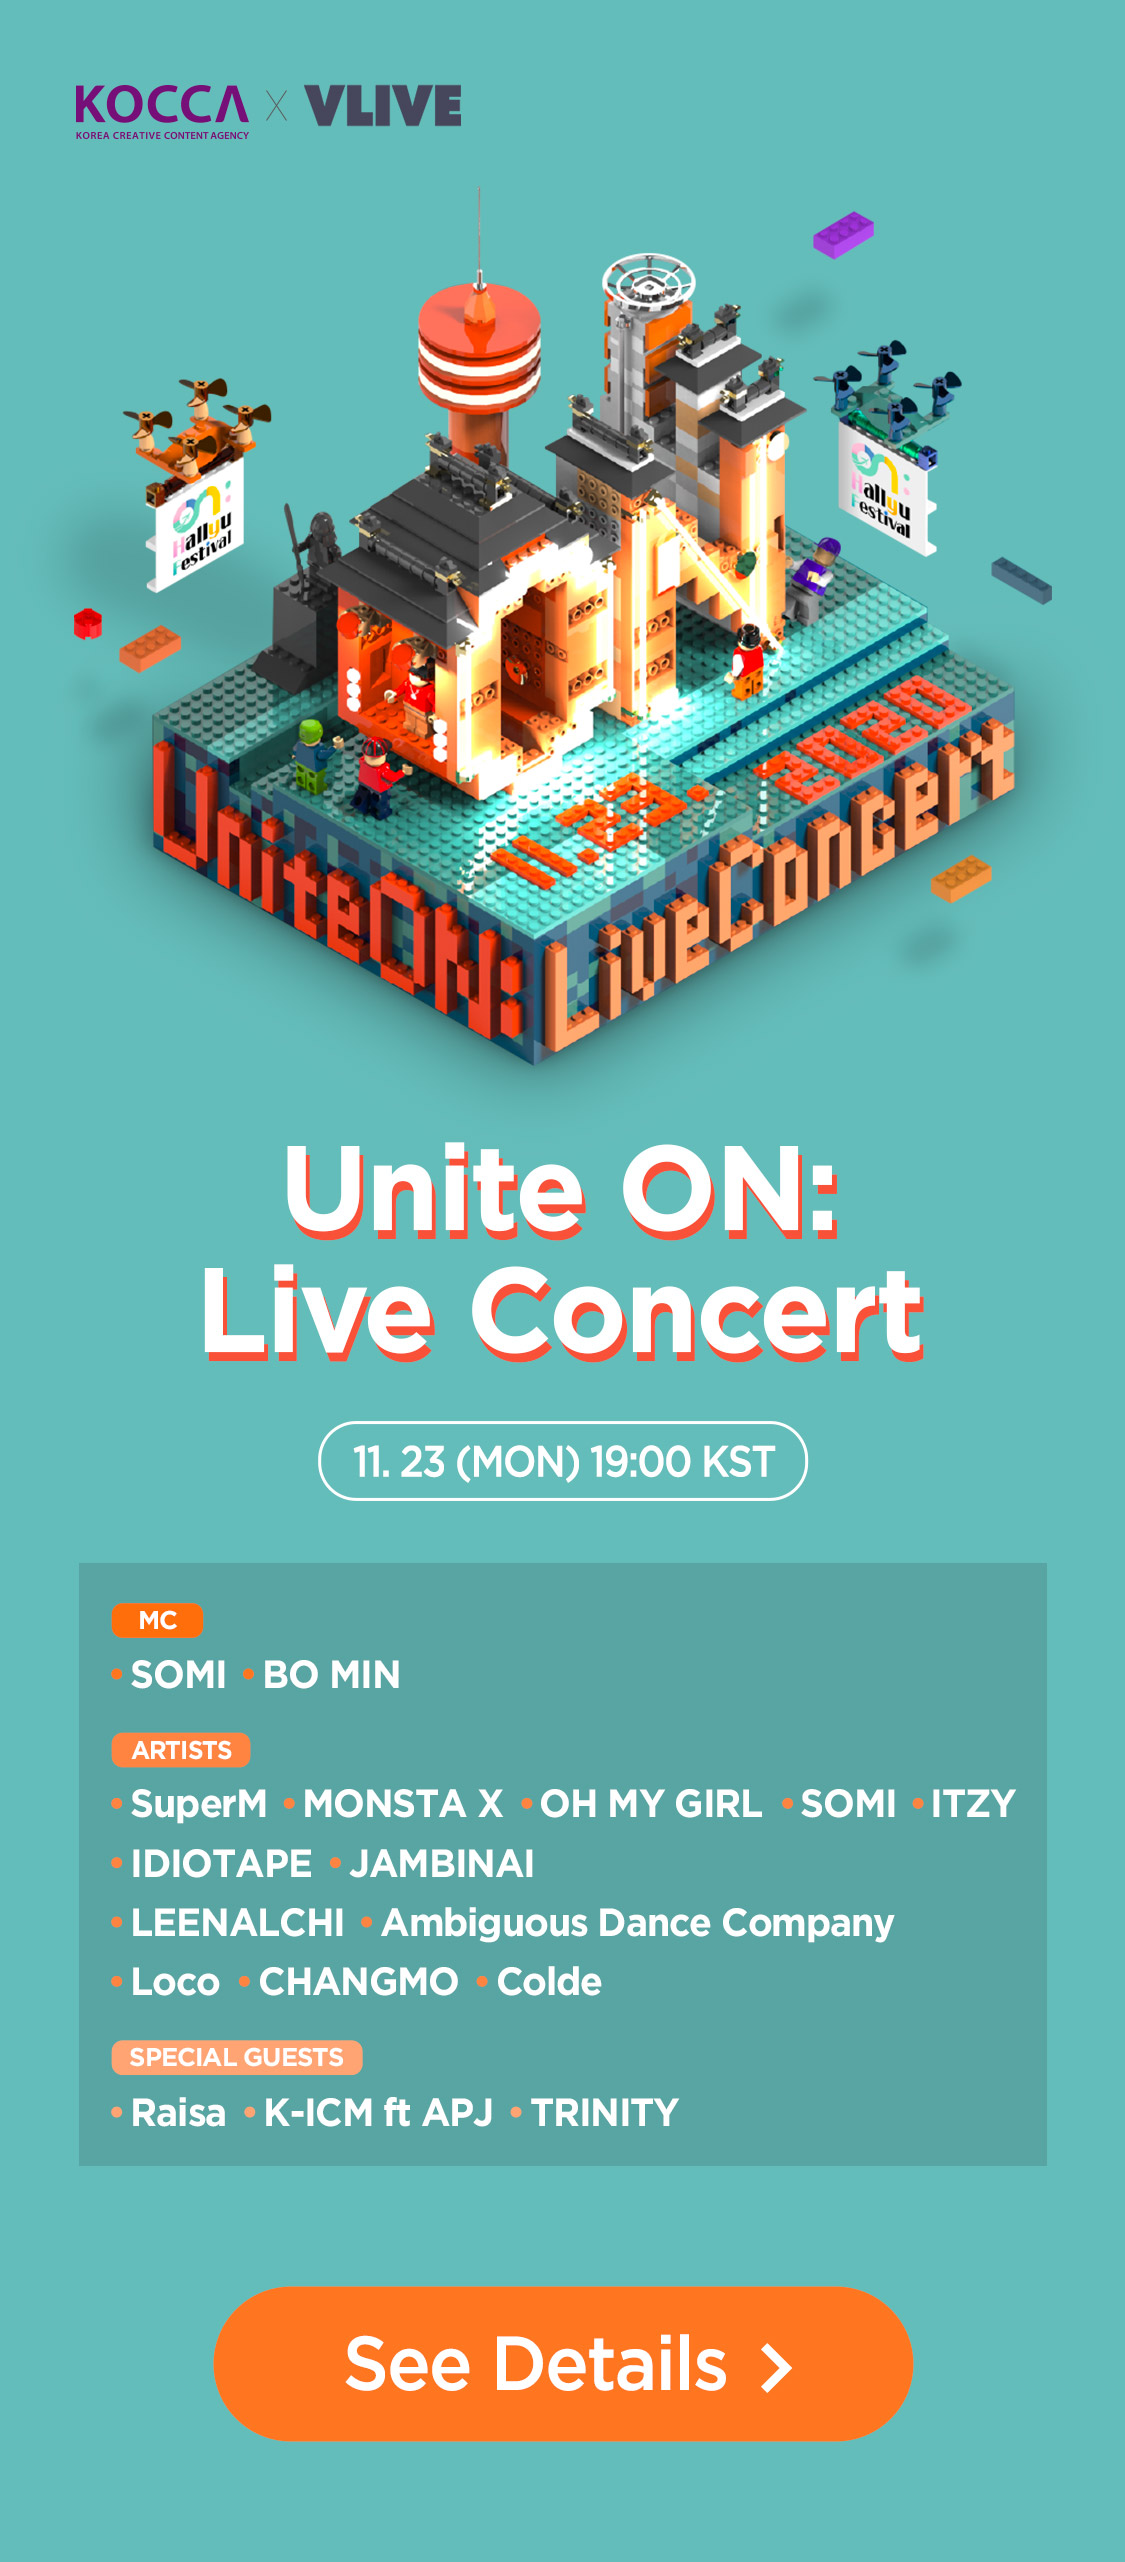 Unite ON: Live Concert